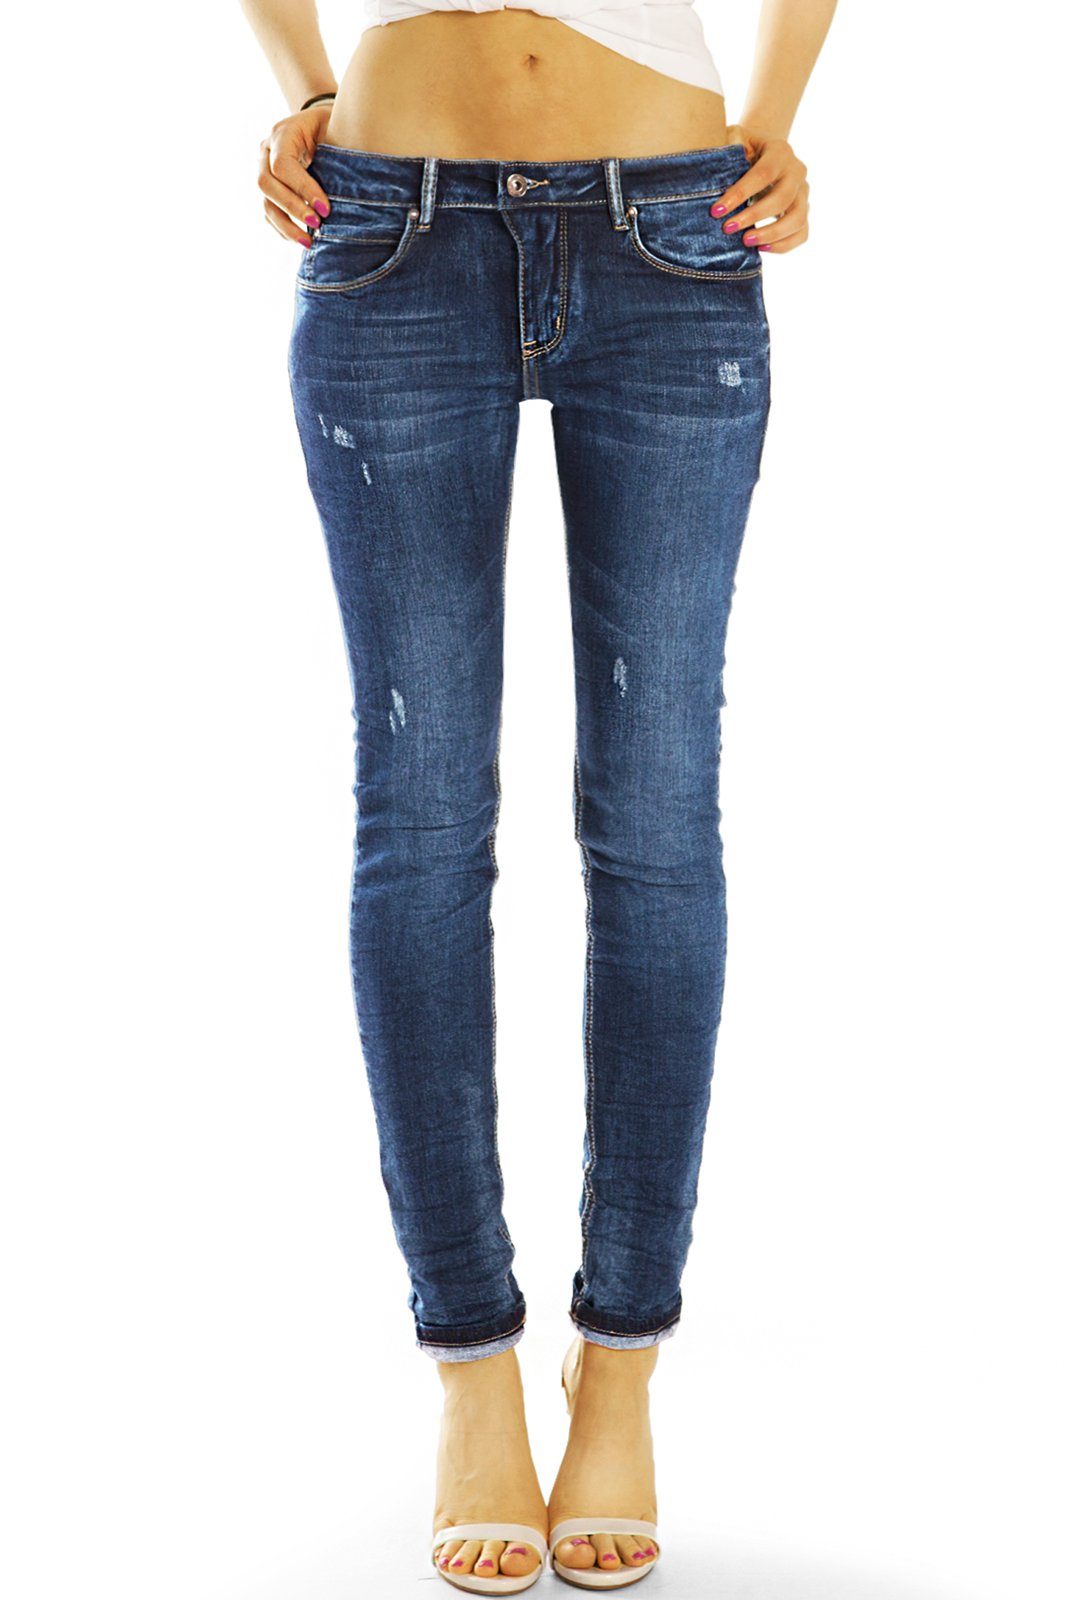 be styled Low-rise-Jeans »Skinny Röhrenjeans Stretch Fit in dunkelblau  medium / low waist Hosen - Damen - j55L« mit Stretch Anteil, 5 Pocket Style